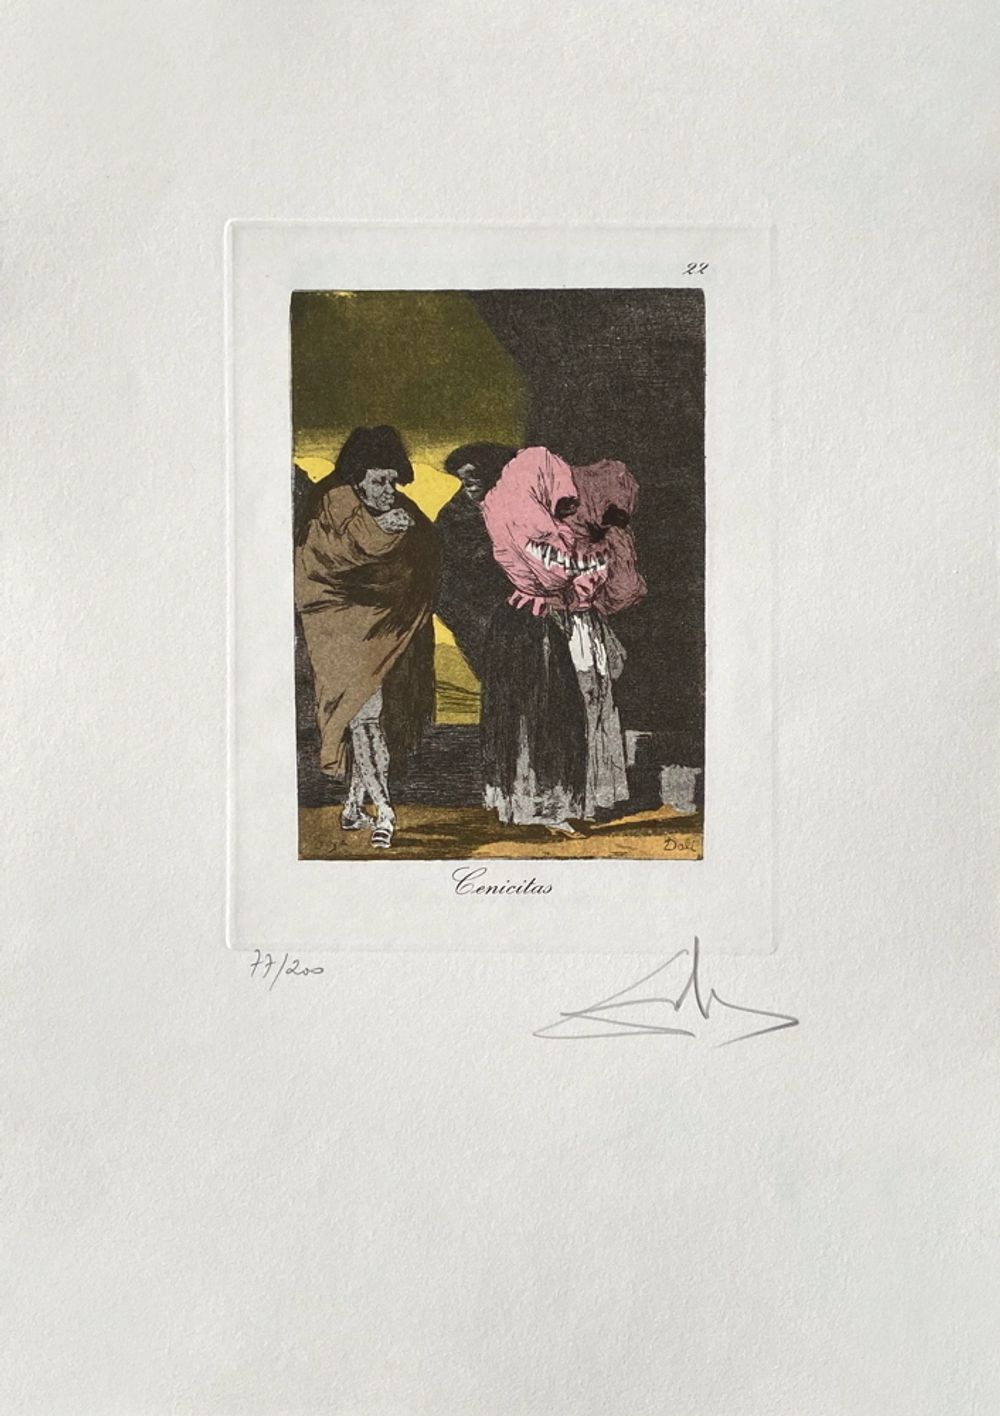 Caprices de Goya - Cenicitas